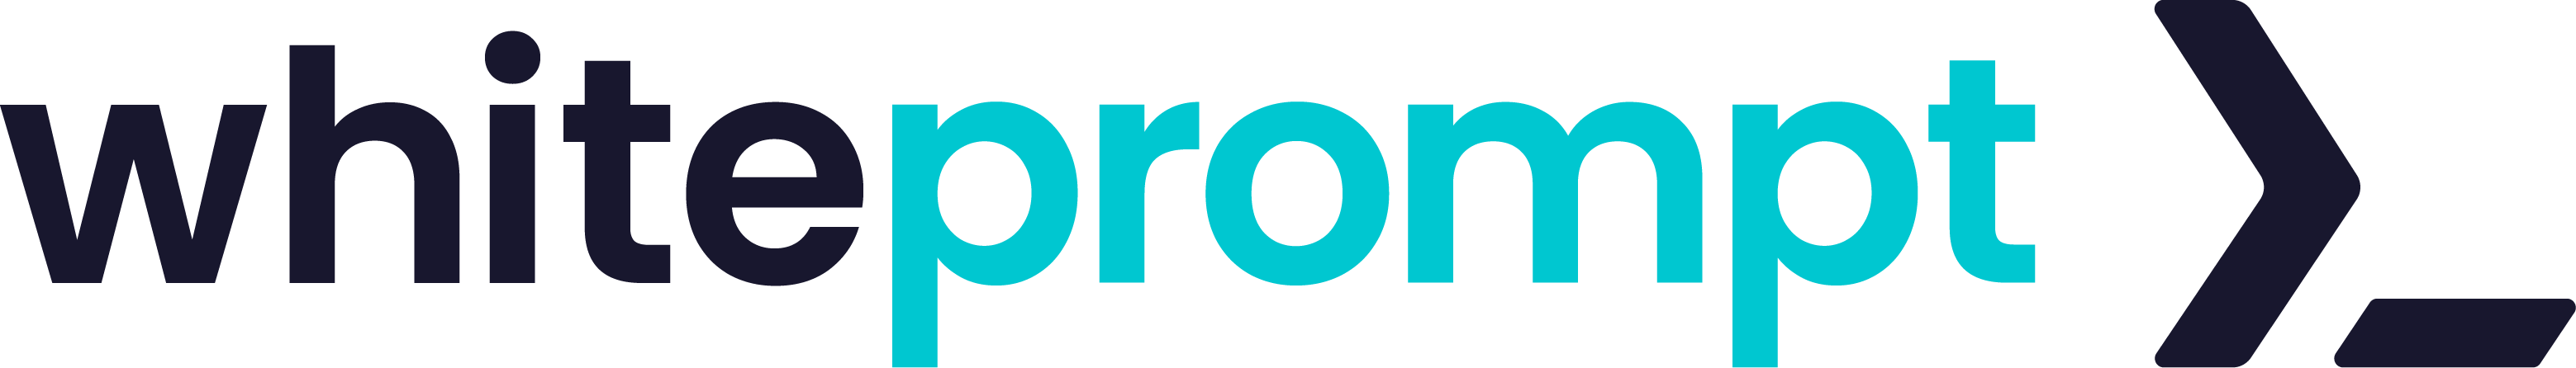 Whiteprompt logo